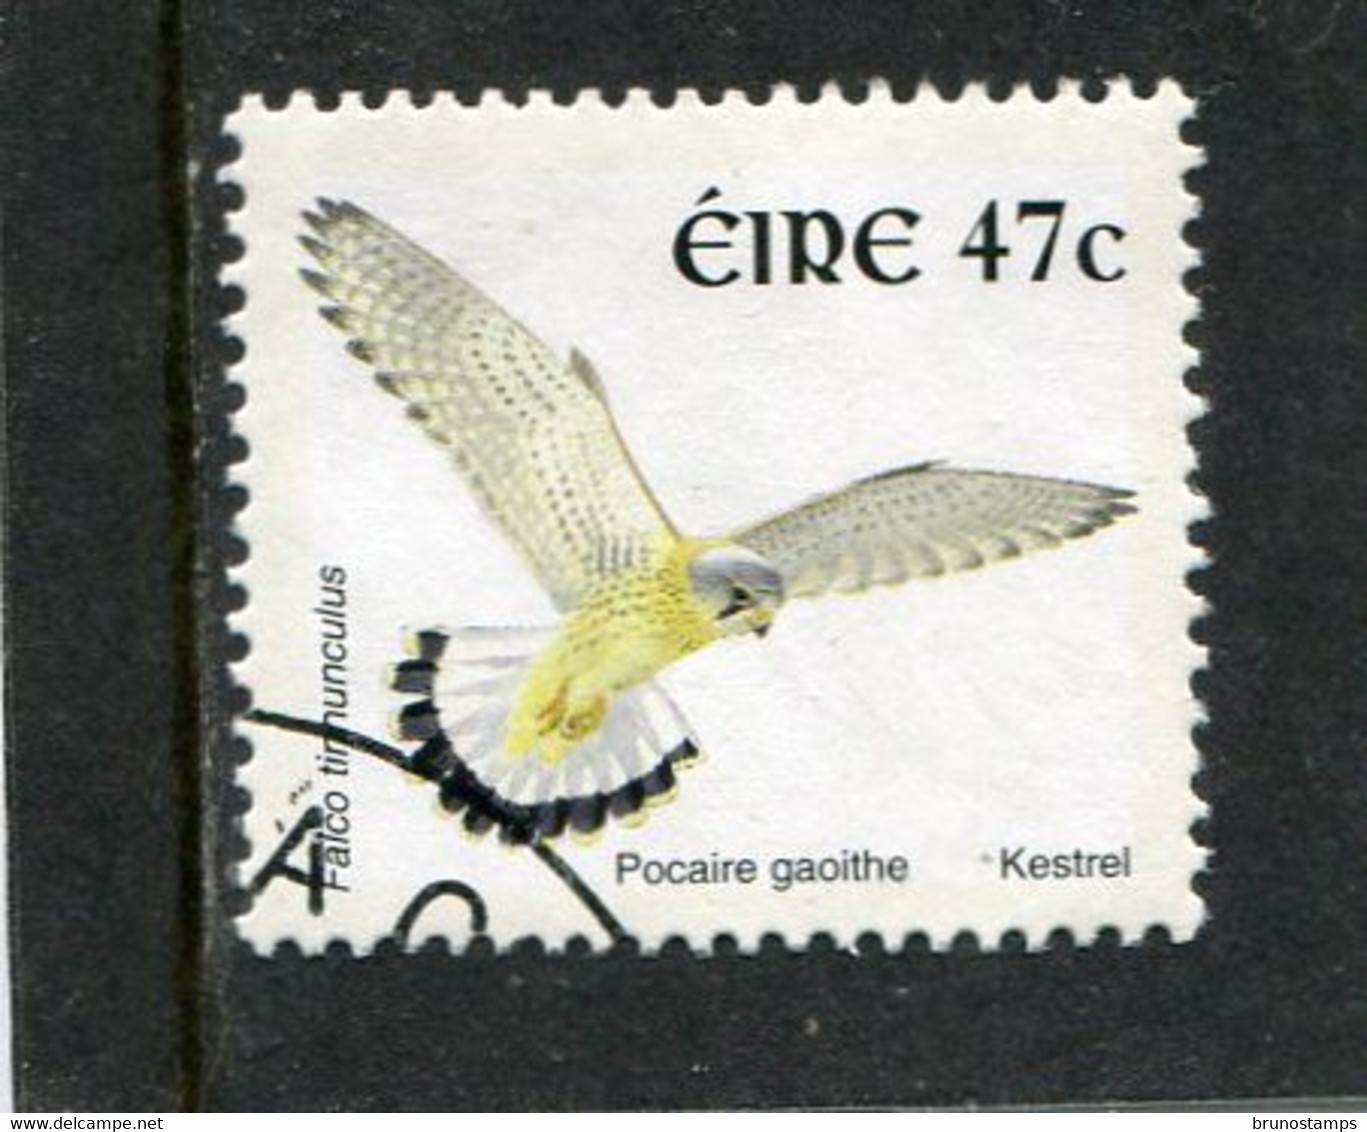 IRELAND/EIRE - 2002  47c  BIRDS  FINE USED - Used Stamps